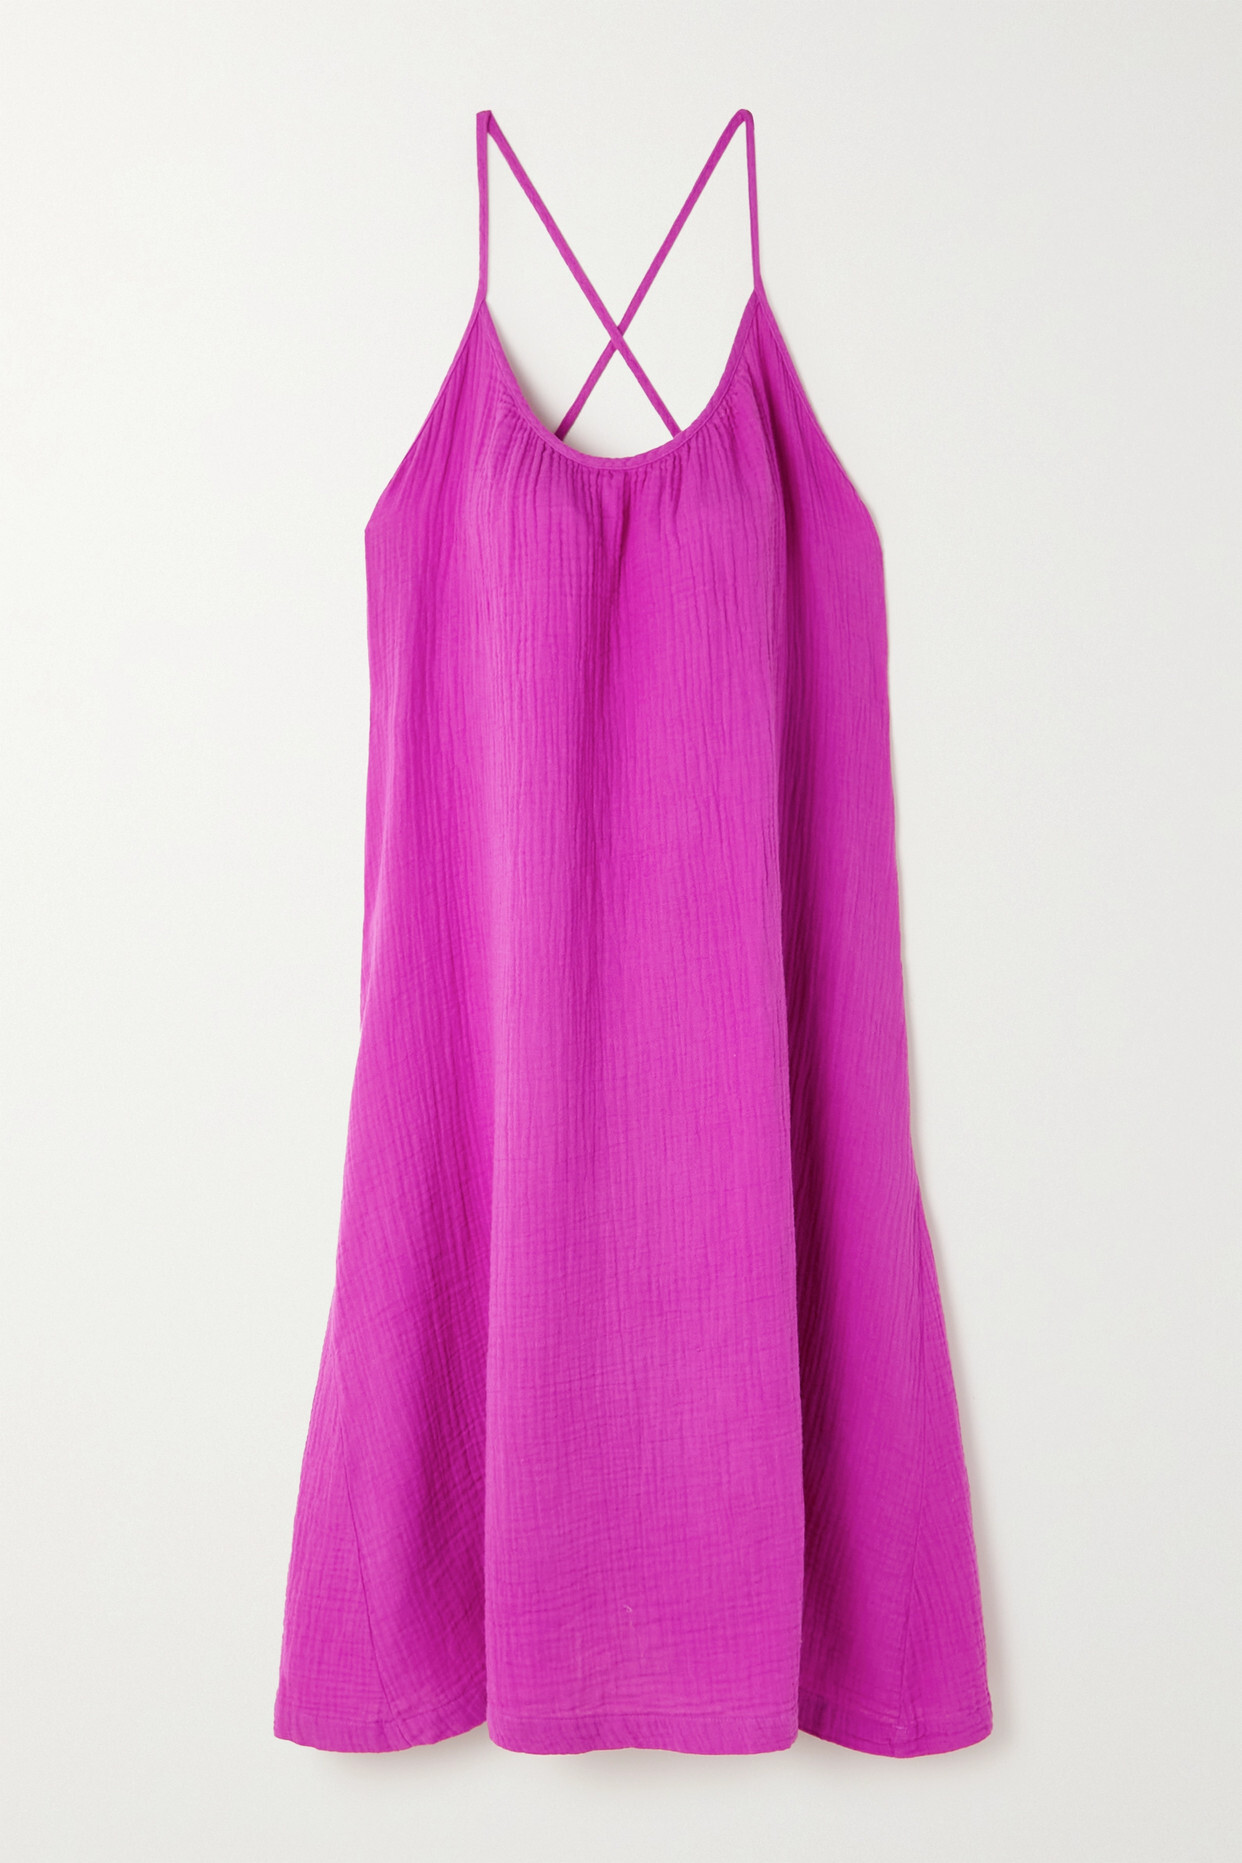 Honorine - Simone Open-back Cotton-gauze Midi Dress - Pink